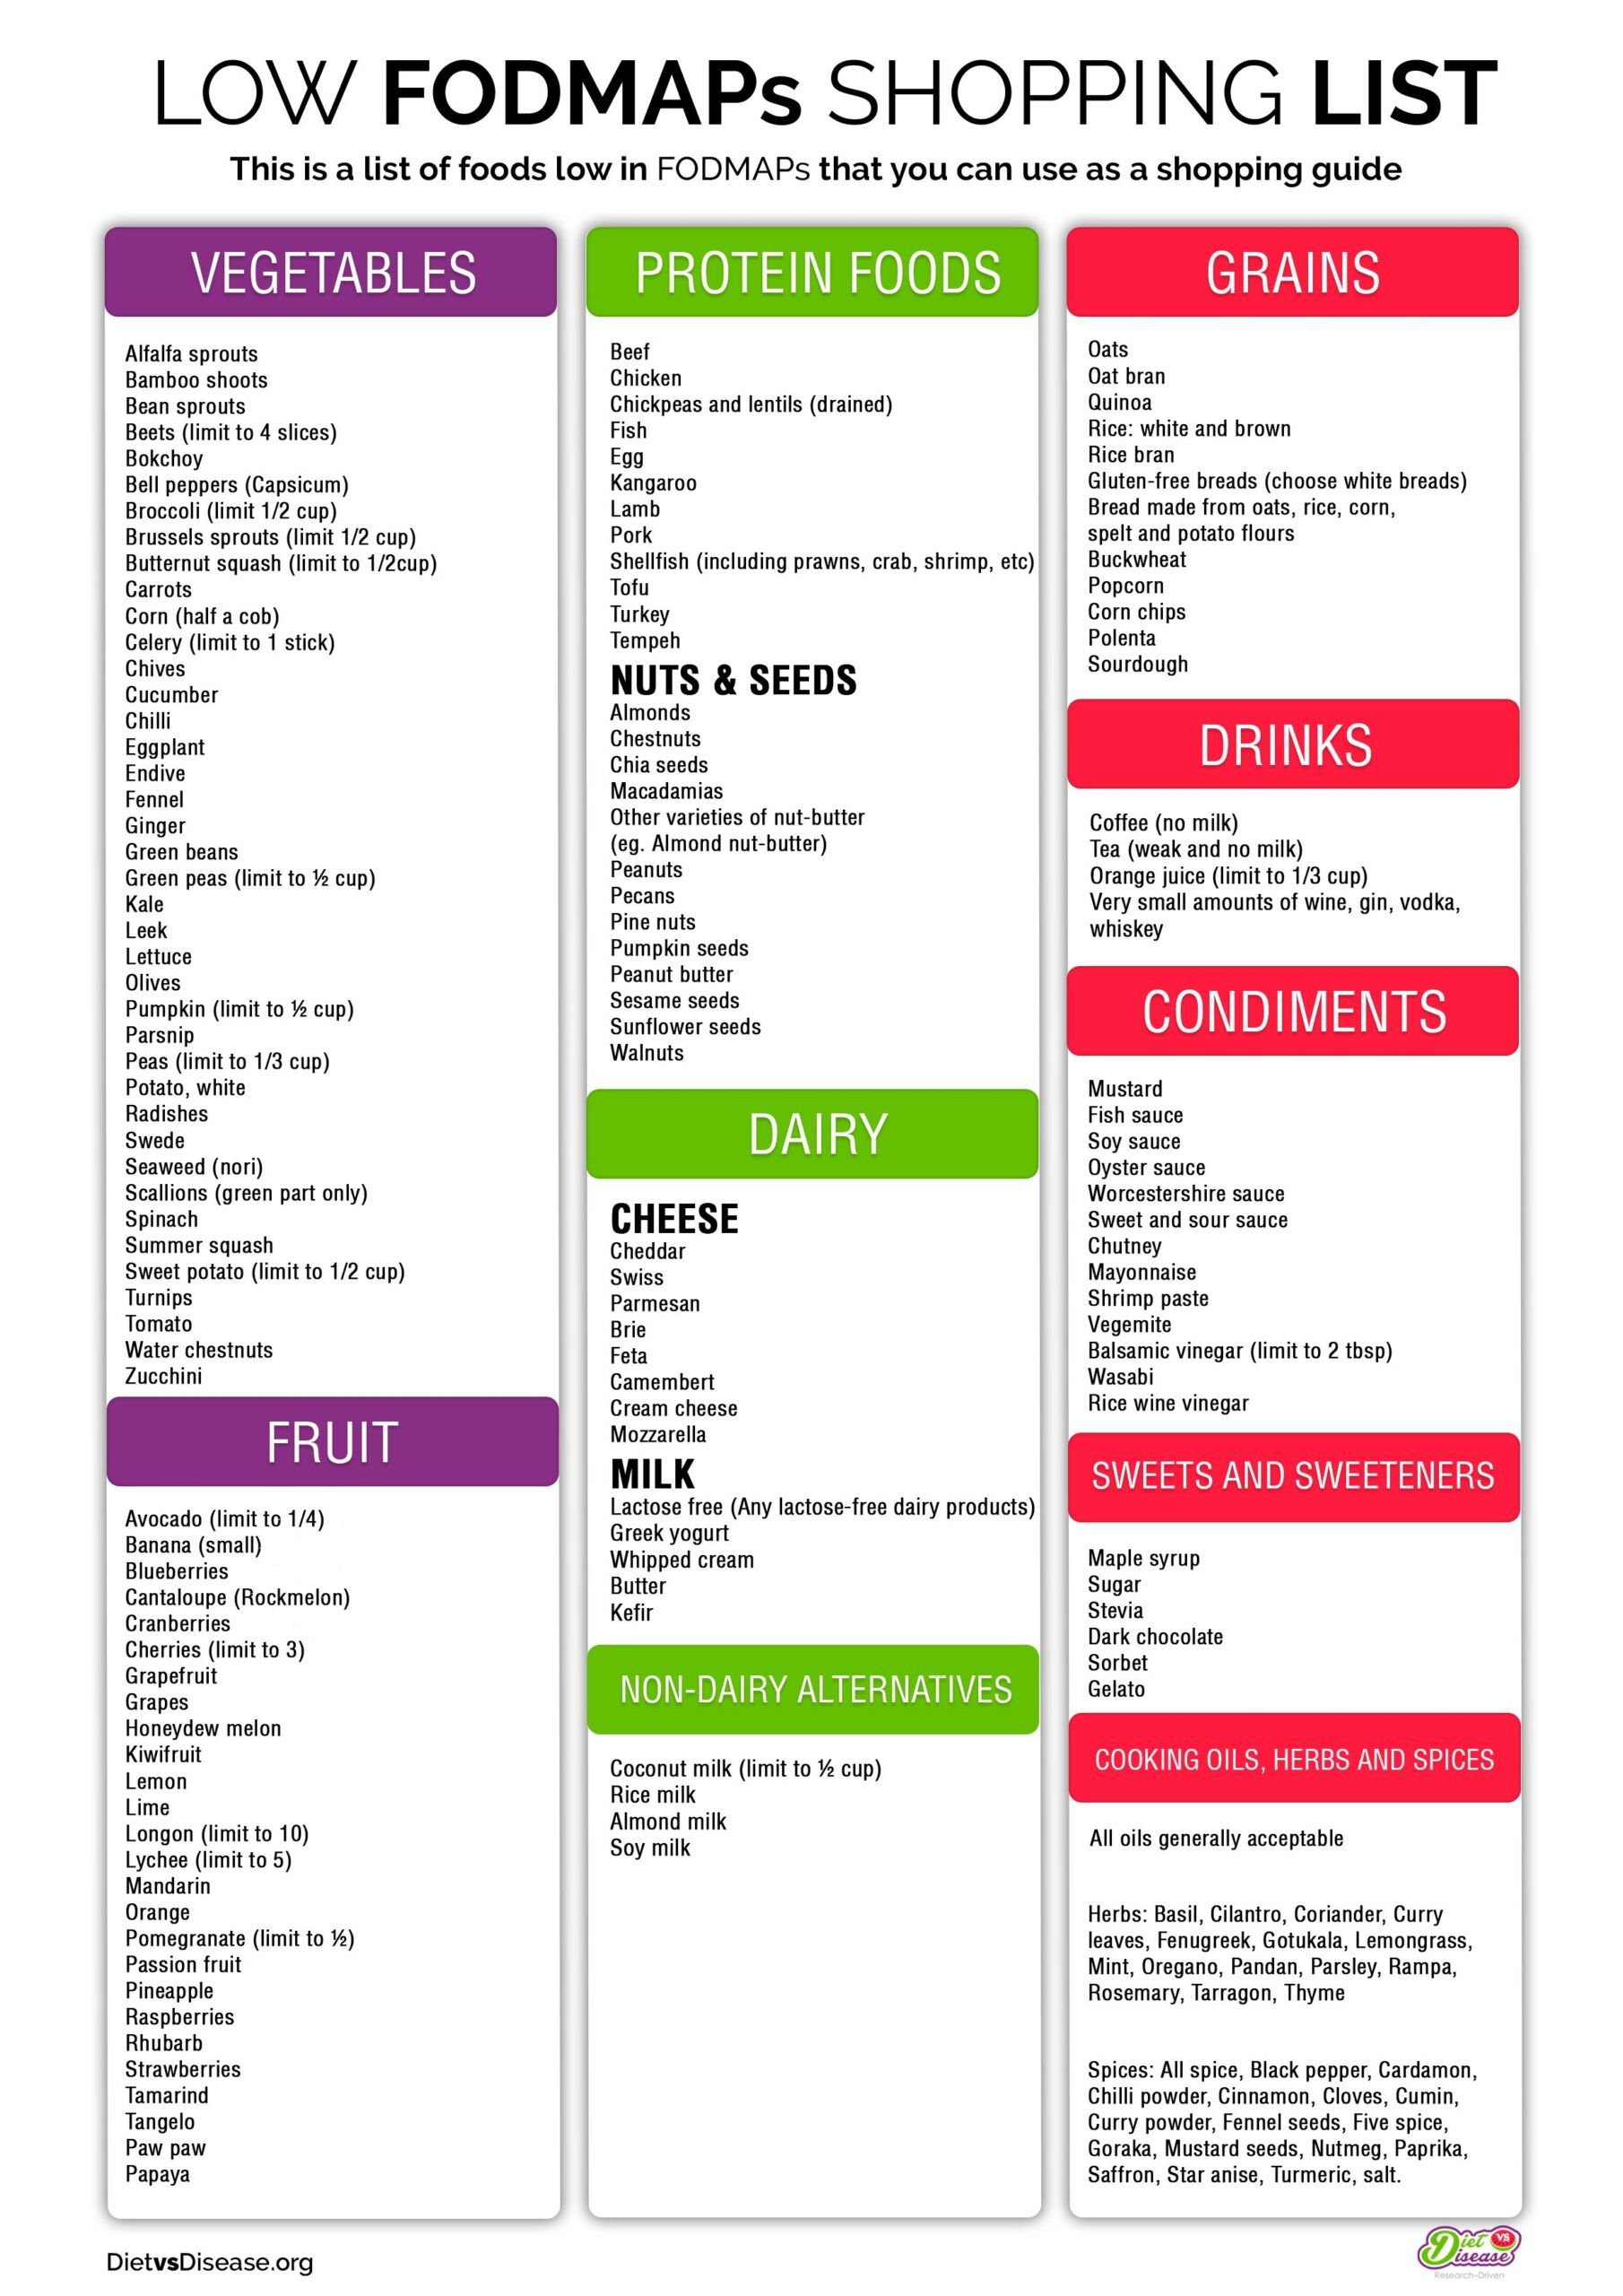 7-Day Low FODMAP Diet Plan For IBS (+Printable PDF) -   24 ibs diet plan ideas